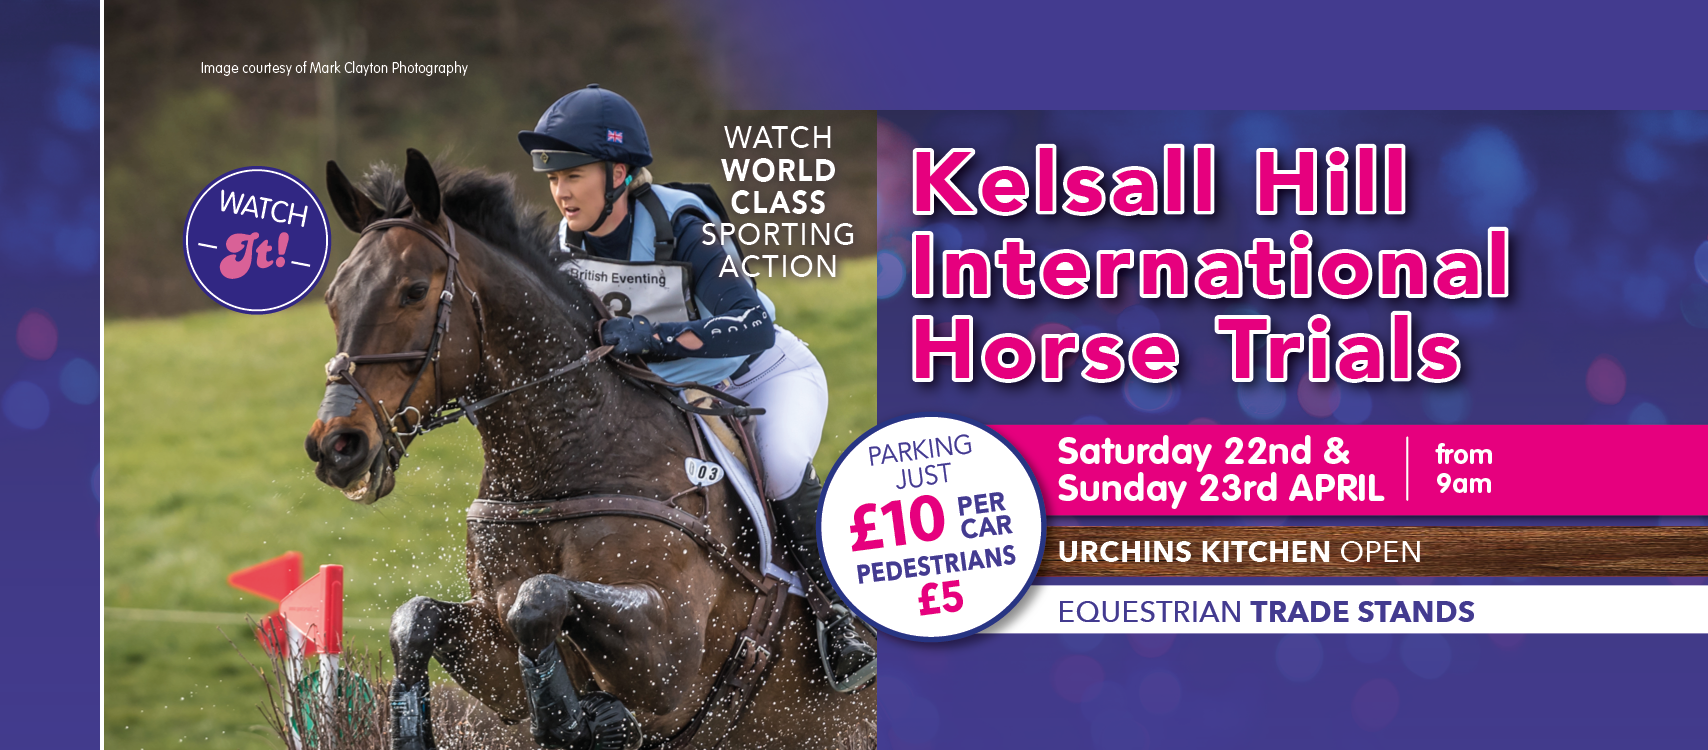 International Horse Trials Kelsall Hill